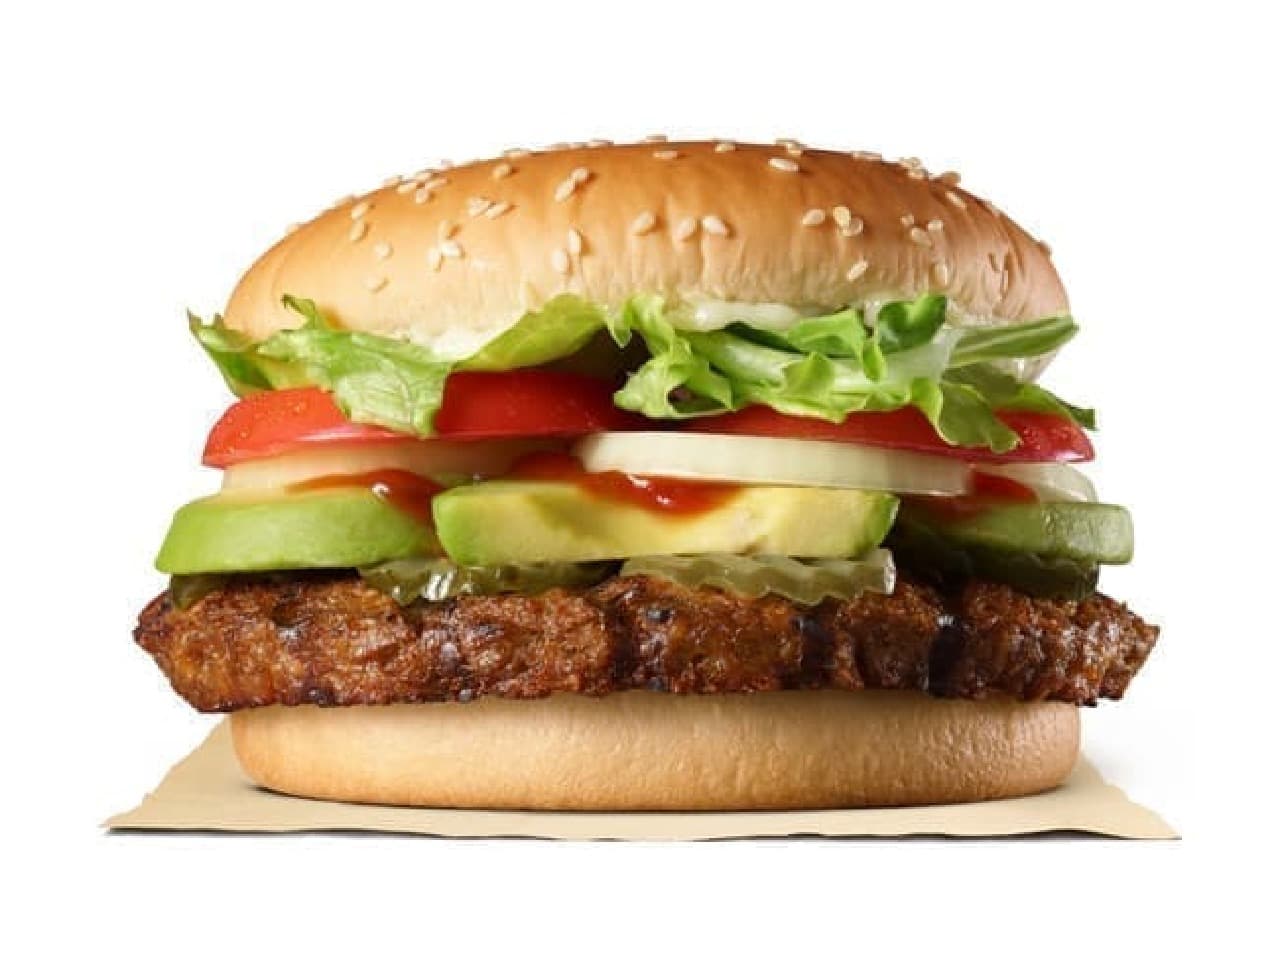 Burger King "Avocado Beef Wapper"